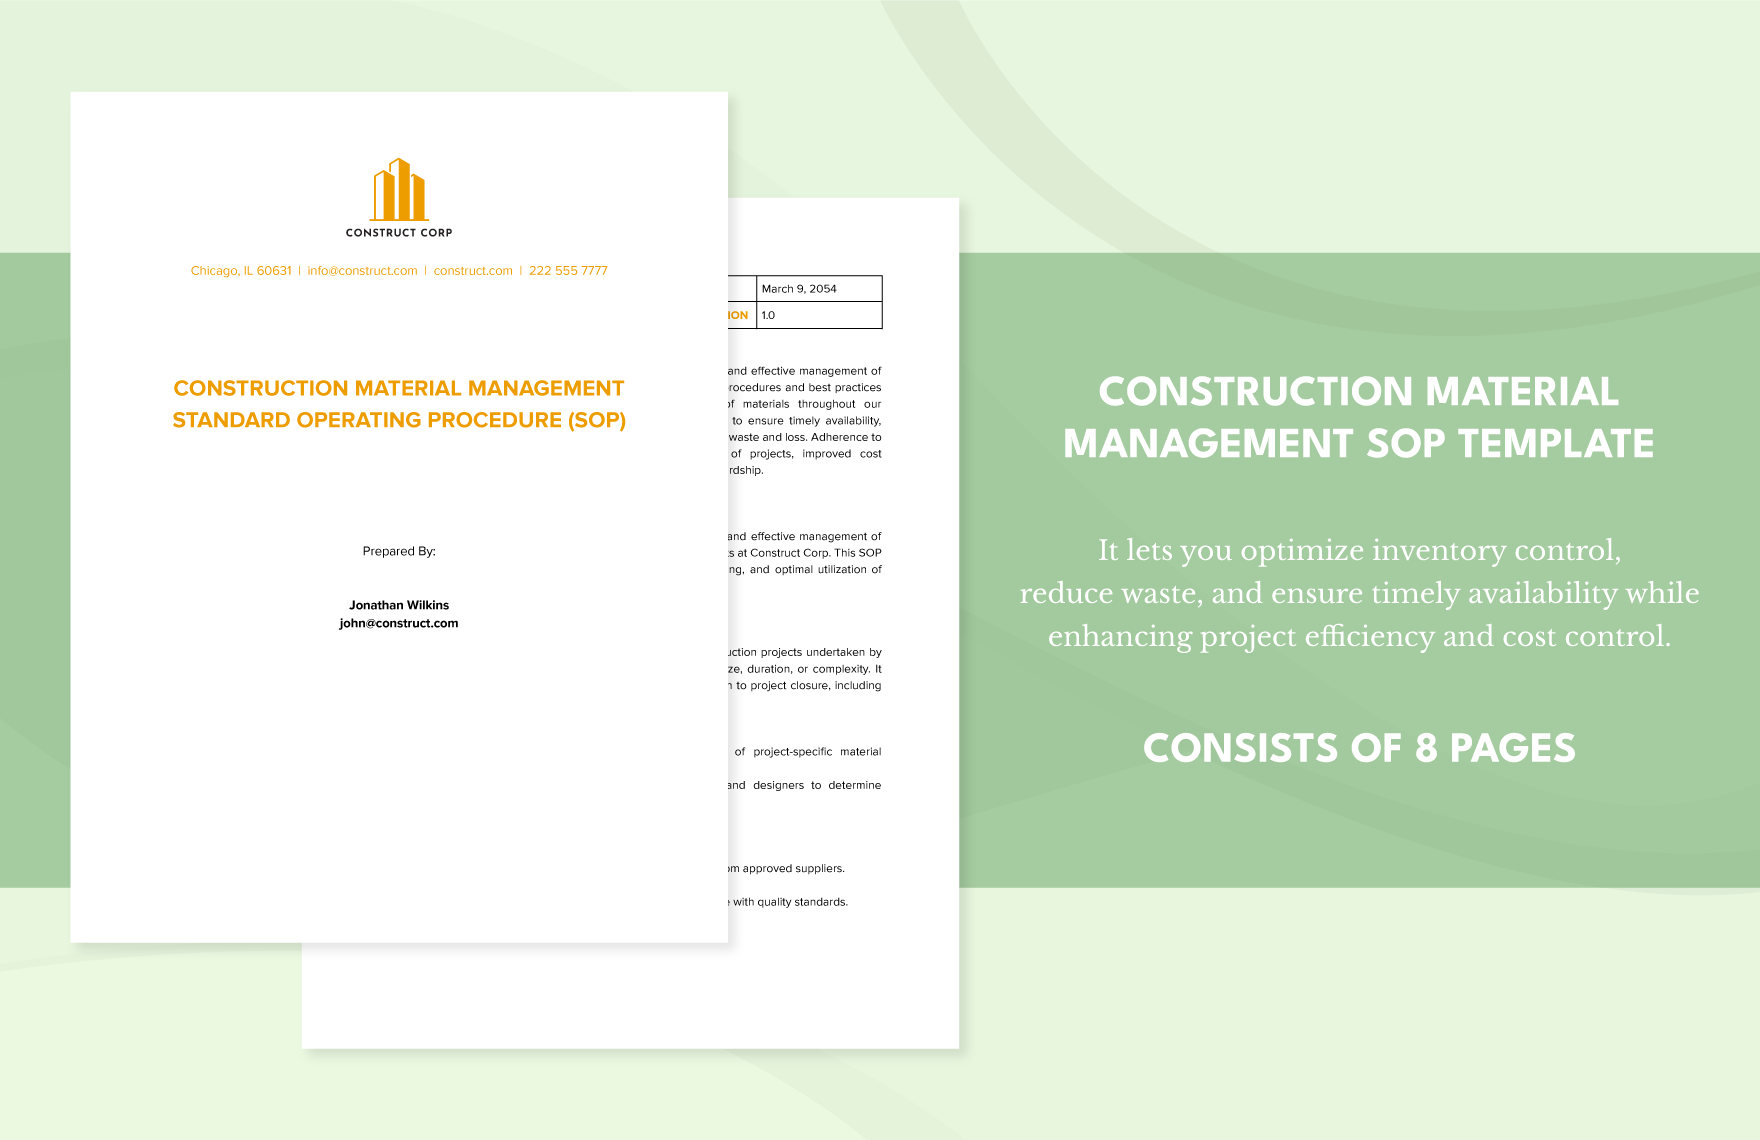 Construction Material Management SOP Template